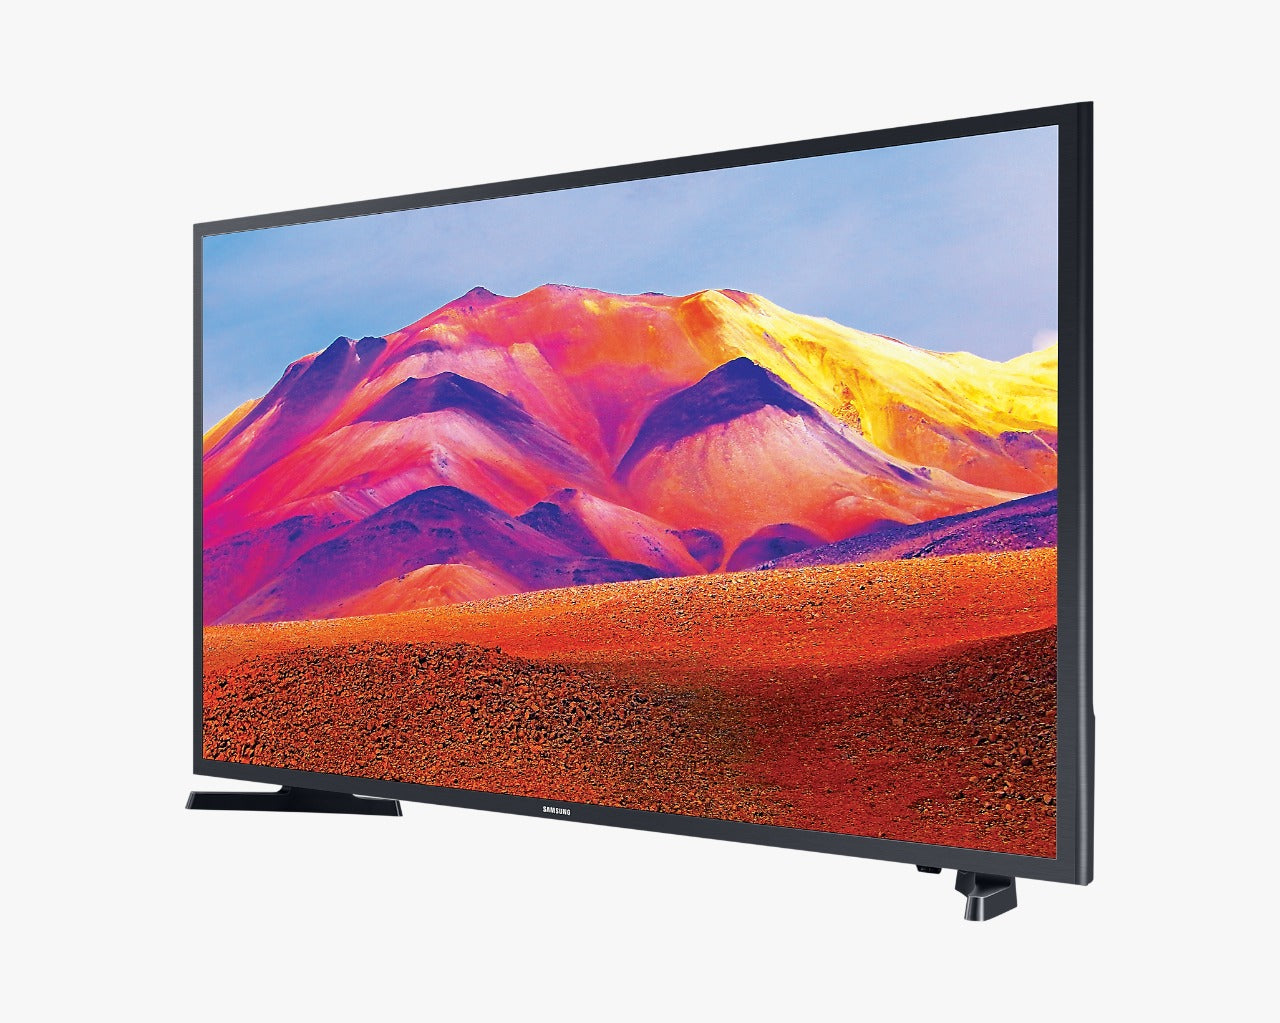 Samsung 1m 08cm (43") 43TE50F Smart HD TV